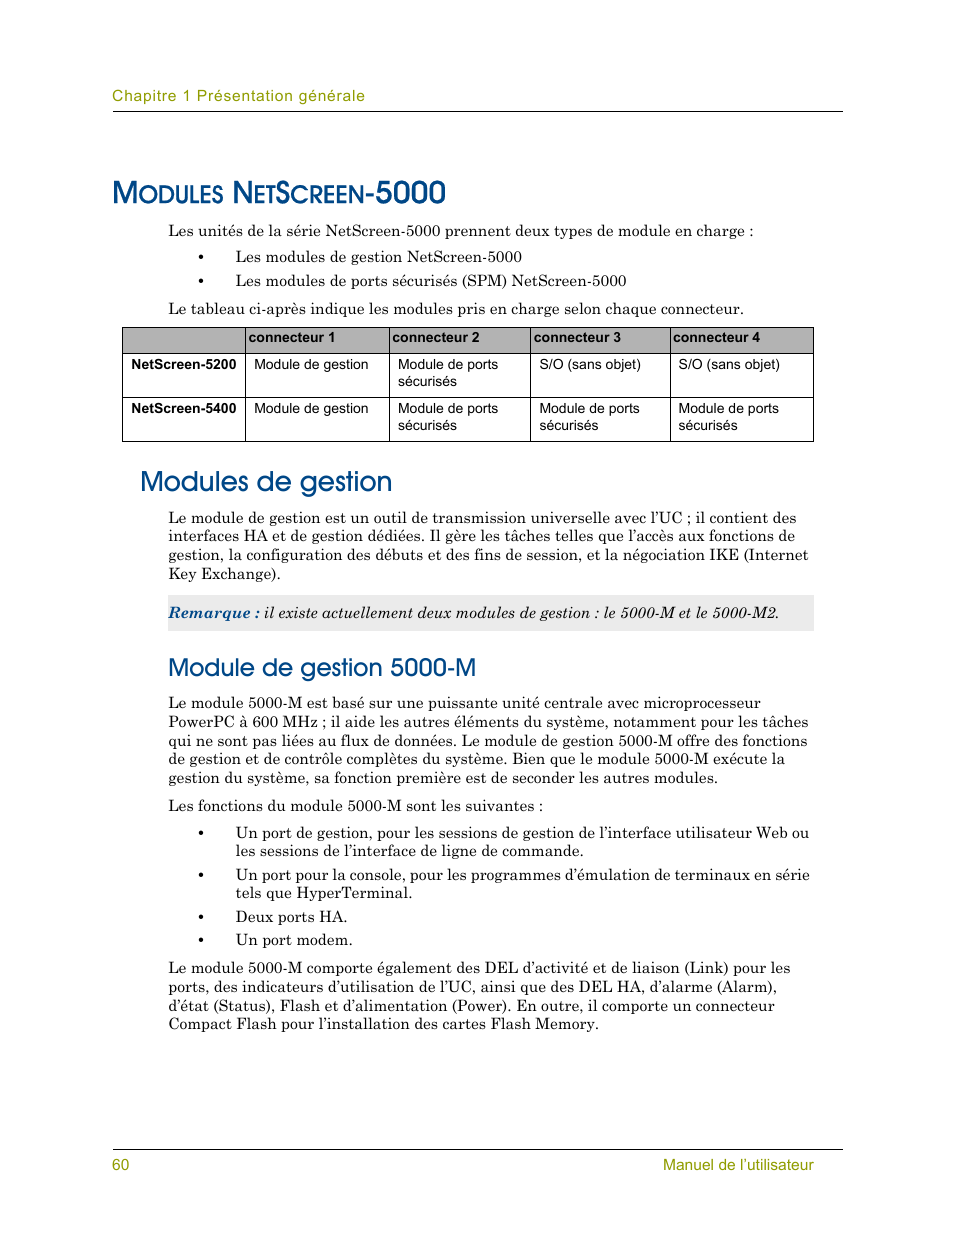 Modules netscreen-5000, Modules de gestion, Module de gestion 5000-m | Odules, Creen | Juniper Networks 5000 SERIES Manuel d'utilisation | Page 72 / 116